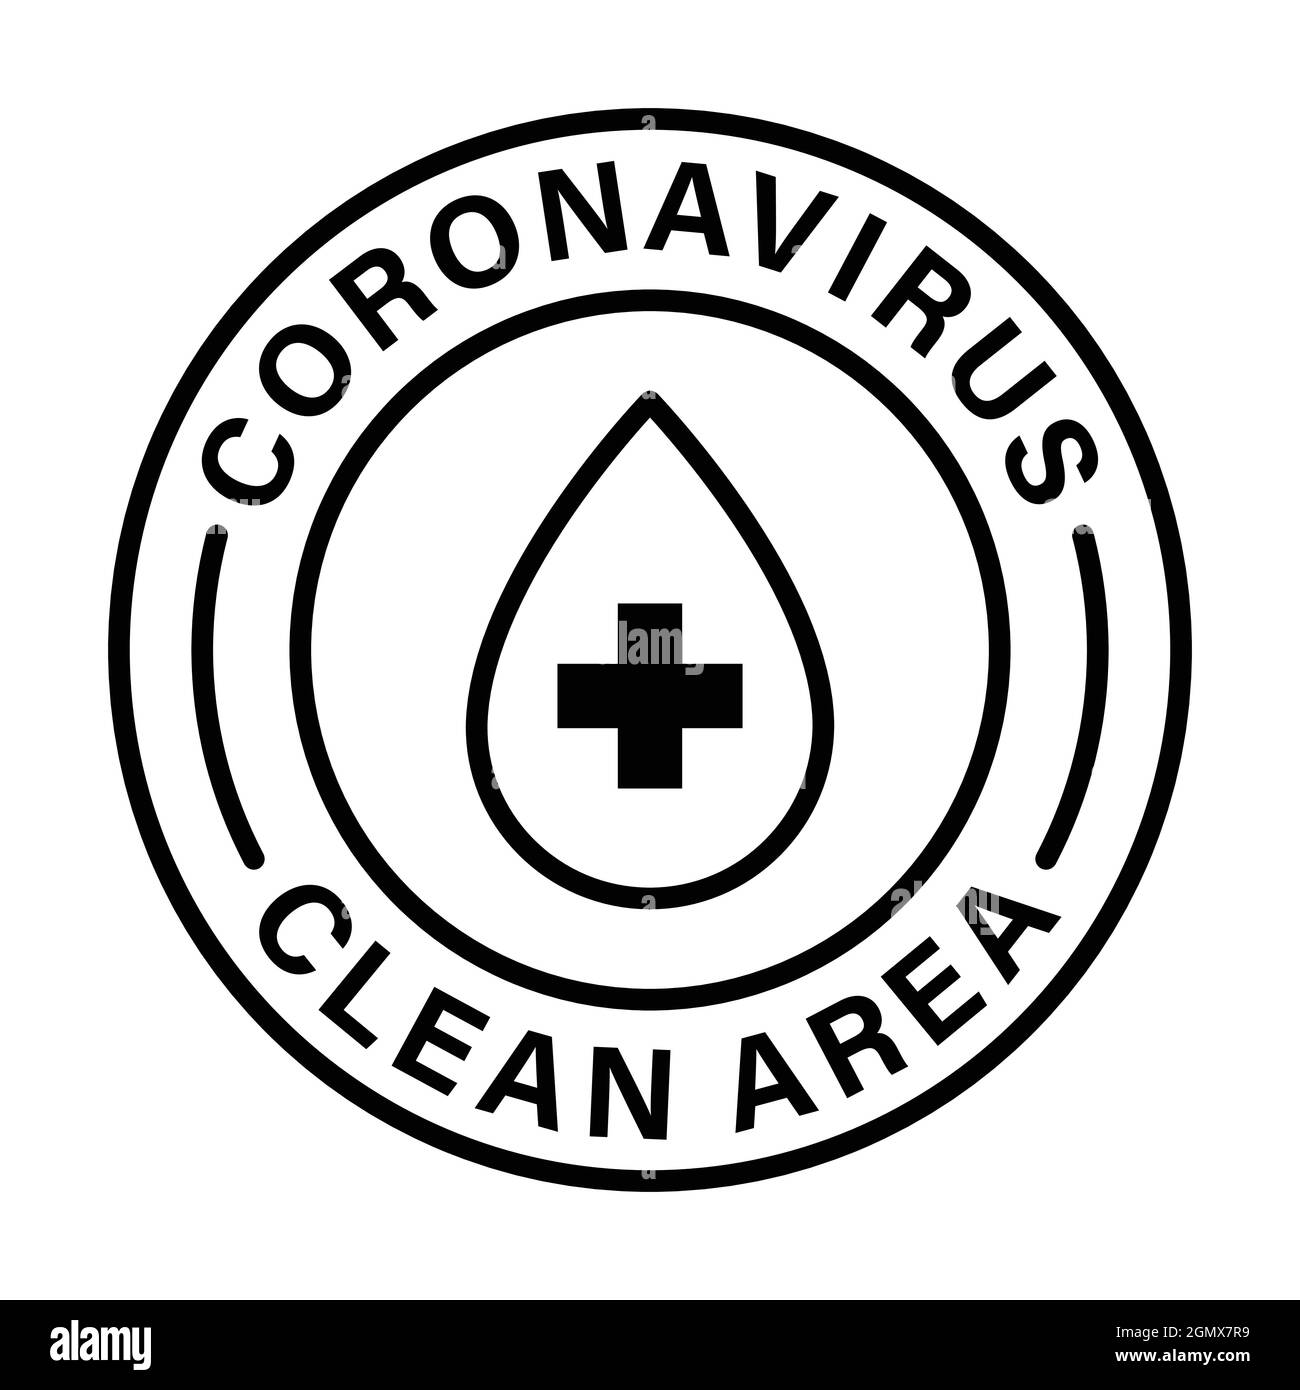 Coronavirus clean area icon vector covid free zone symbol for graphic design, logo, website, social media, mobile app, UI Stock Vector